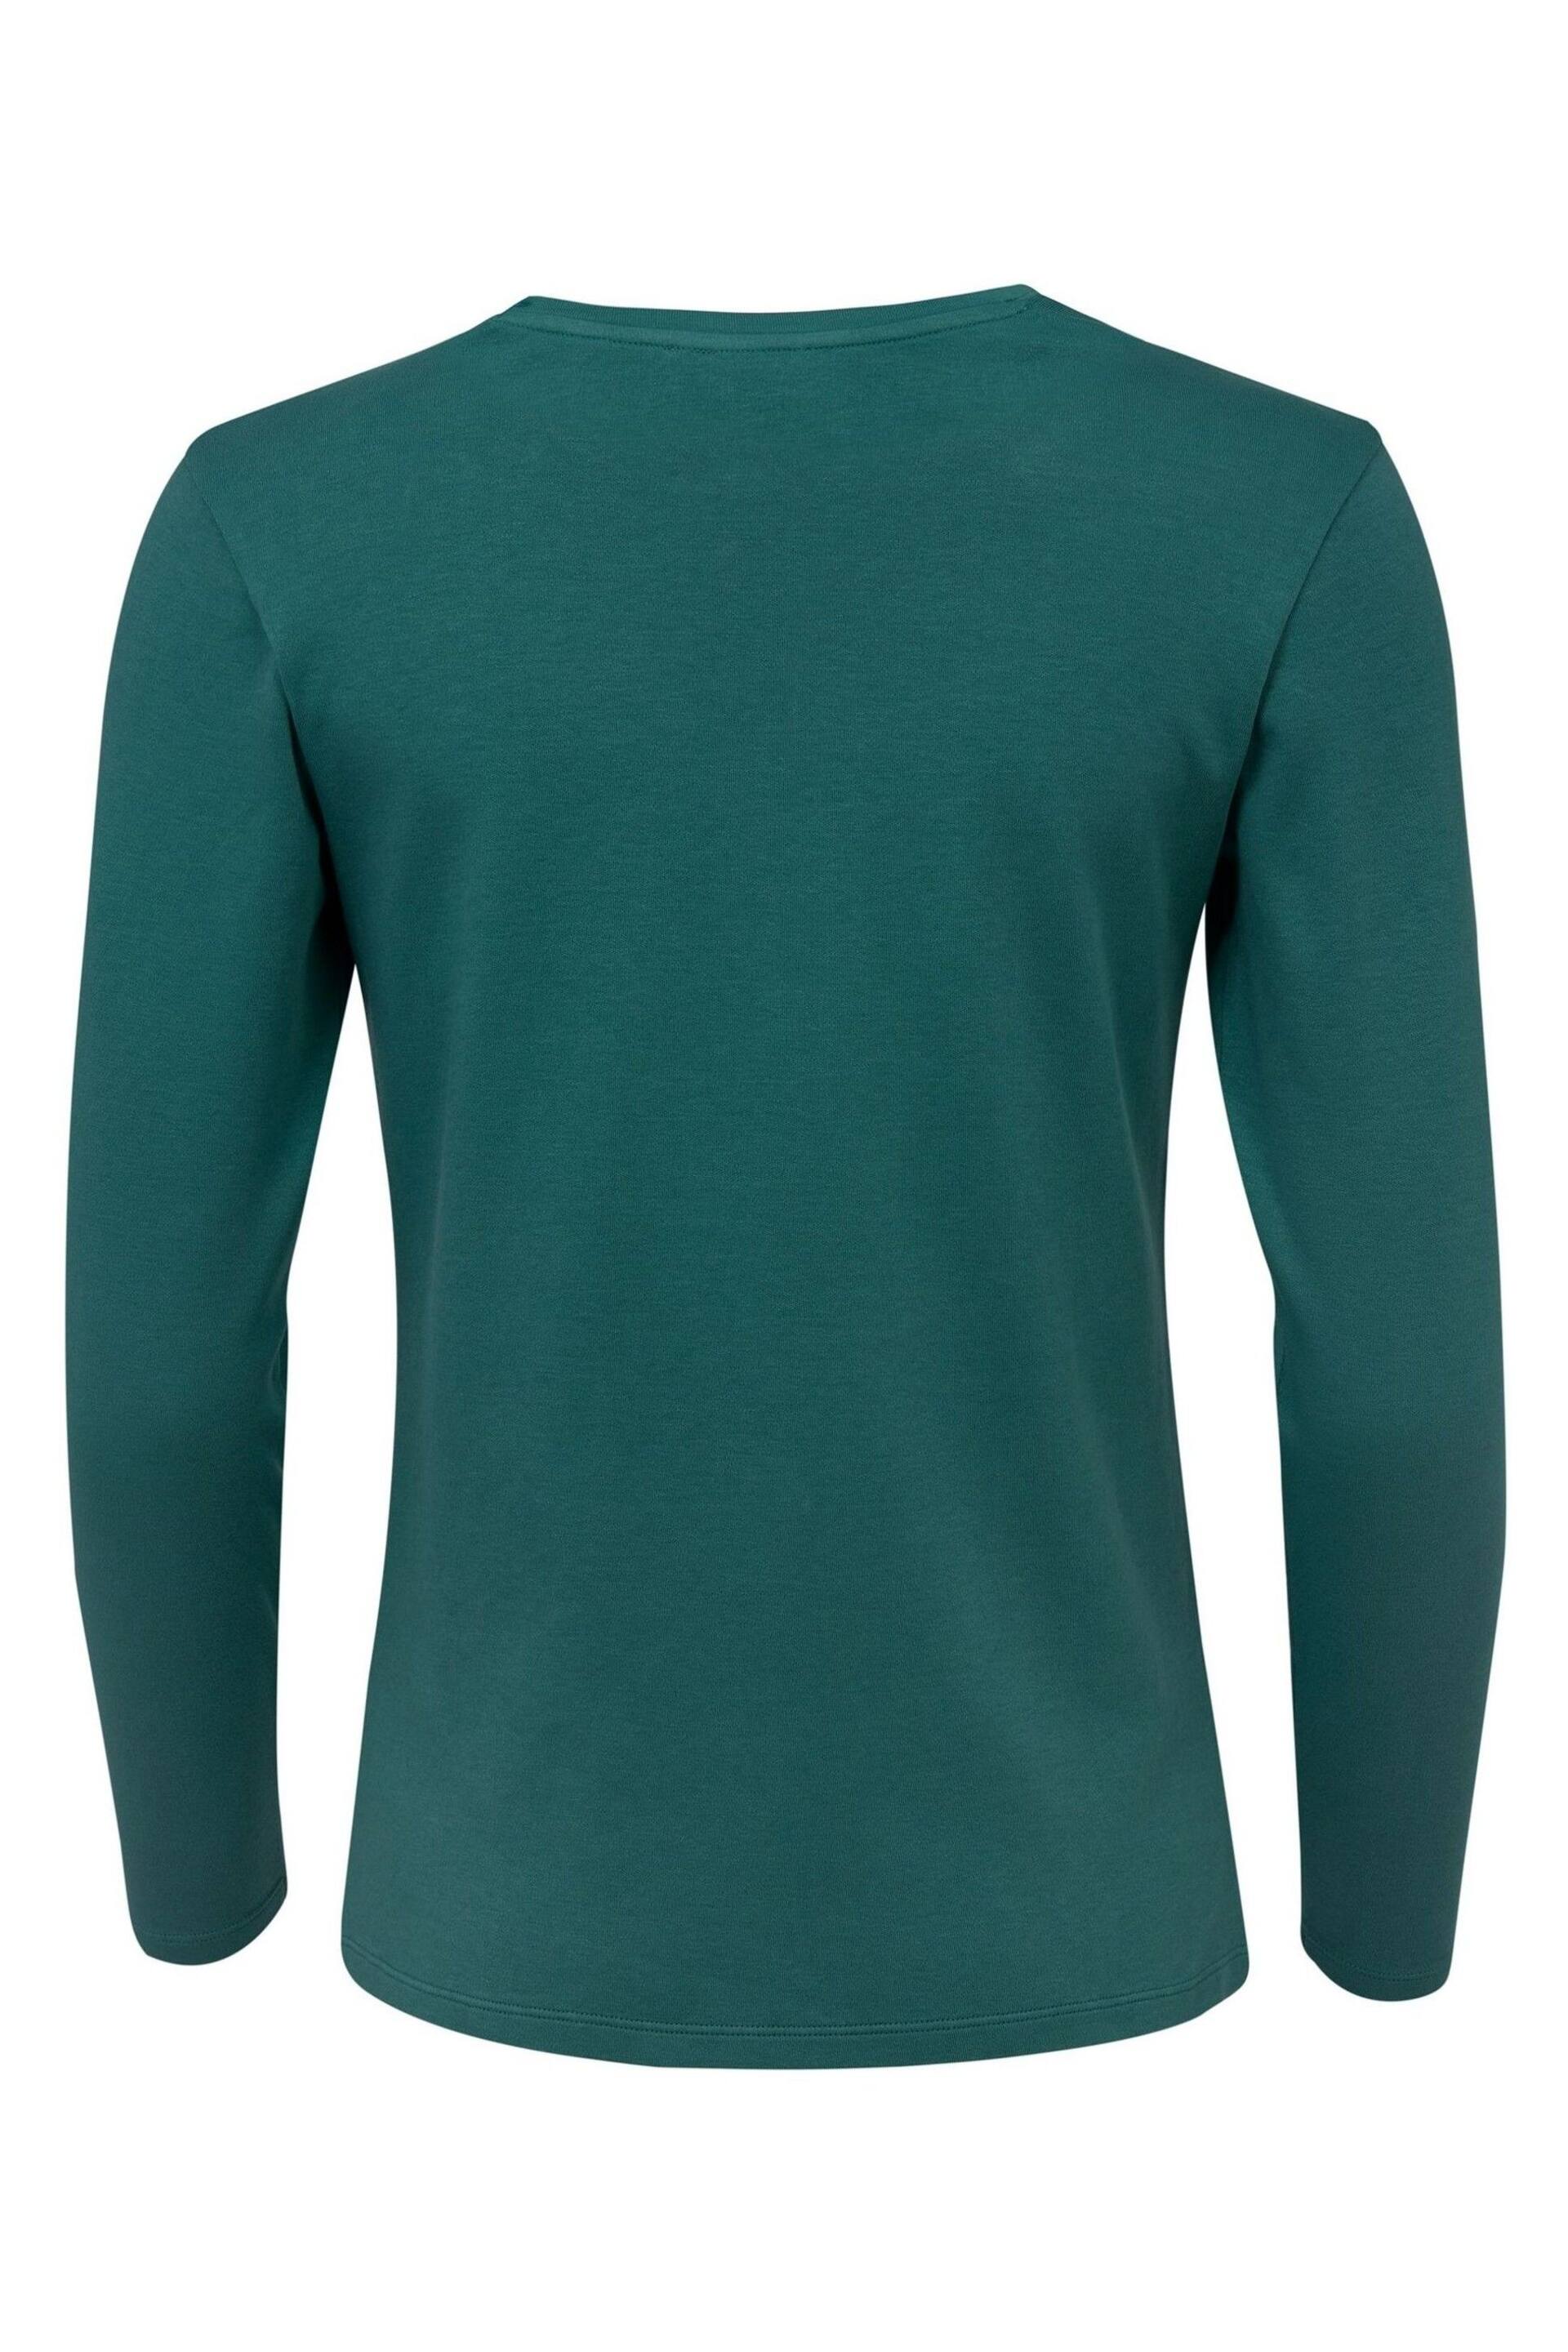 Celtic & Co. Organic Cotton Long Sleeve T-Shirt - Image 3 of 7